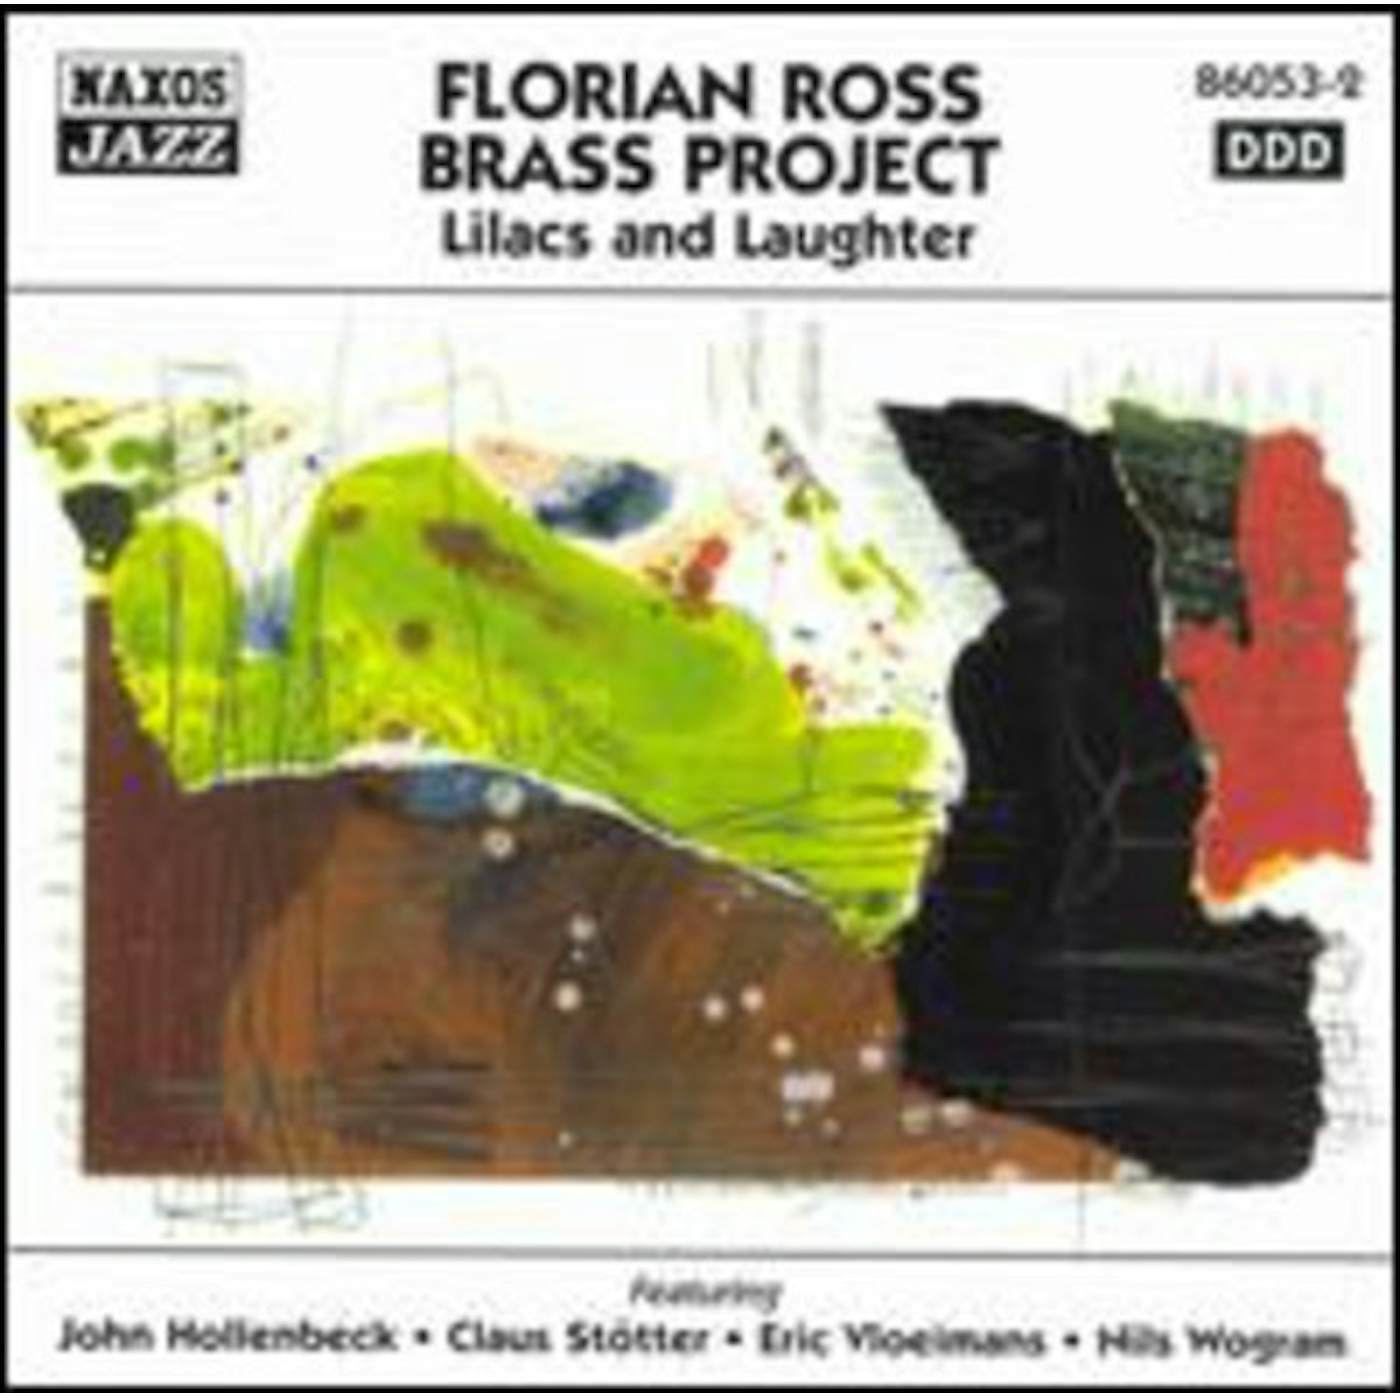 FLORIAN ROSS BRASS PROJECT: LILACS & LAUGHTER CD